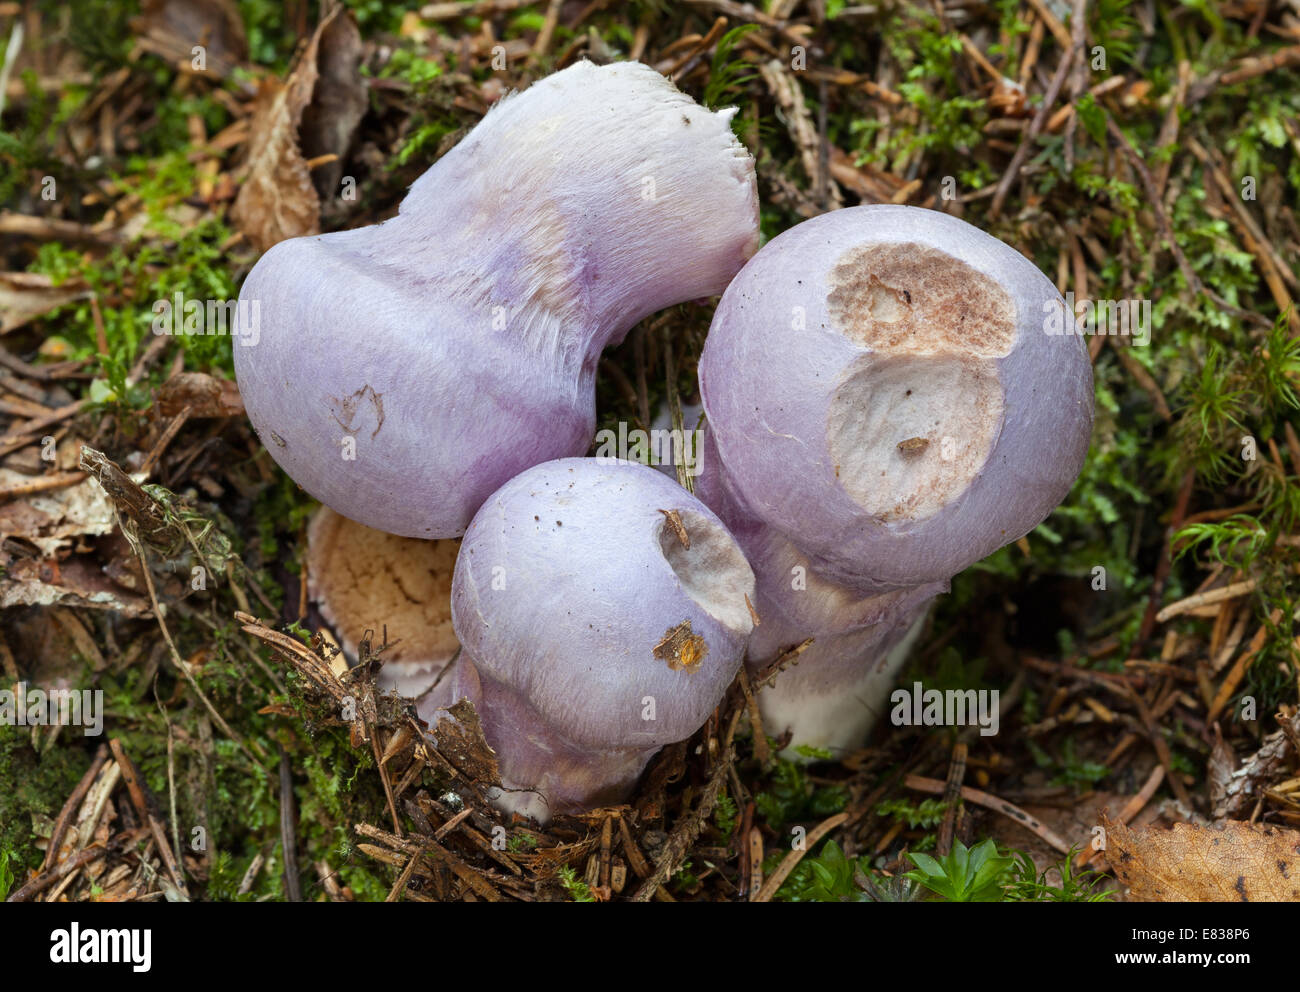 Gassy webcap mushrooms Stock Photo